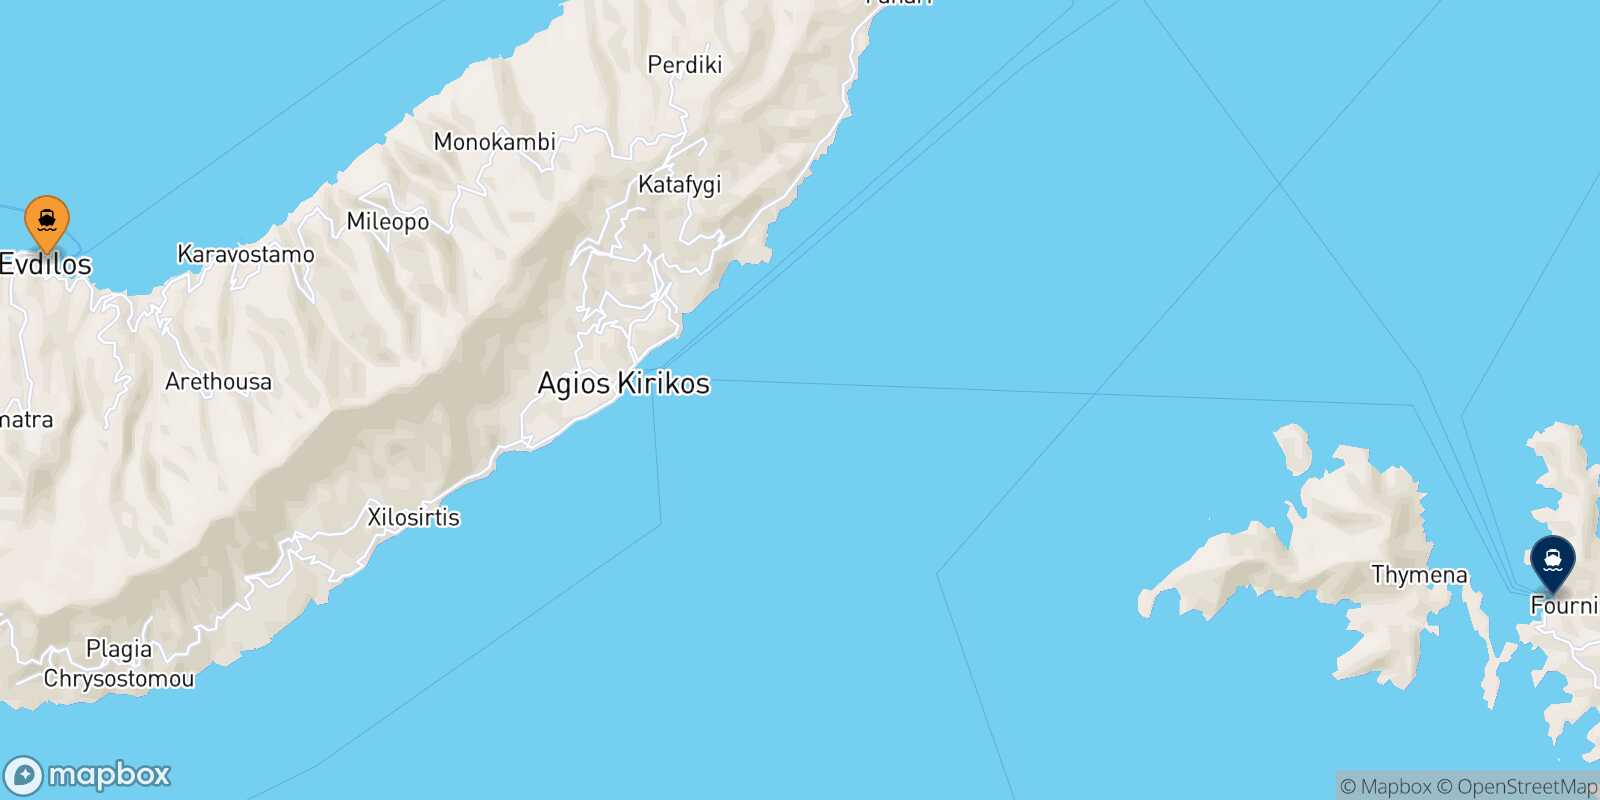 Carte des traverséesAgios Kirikos (Ikaria) Fourni